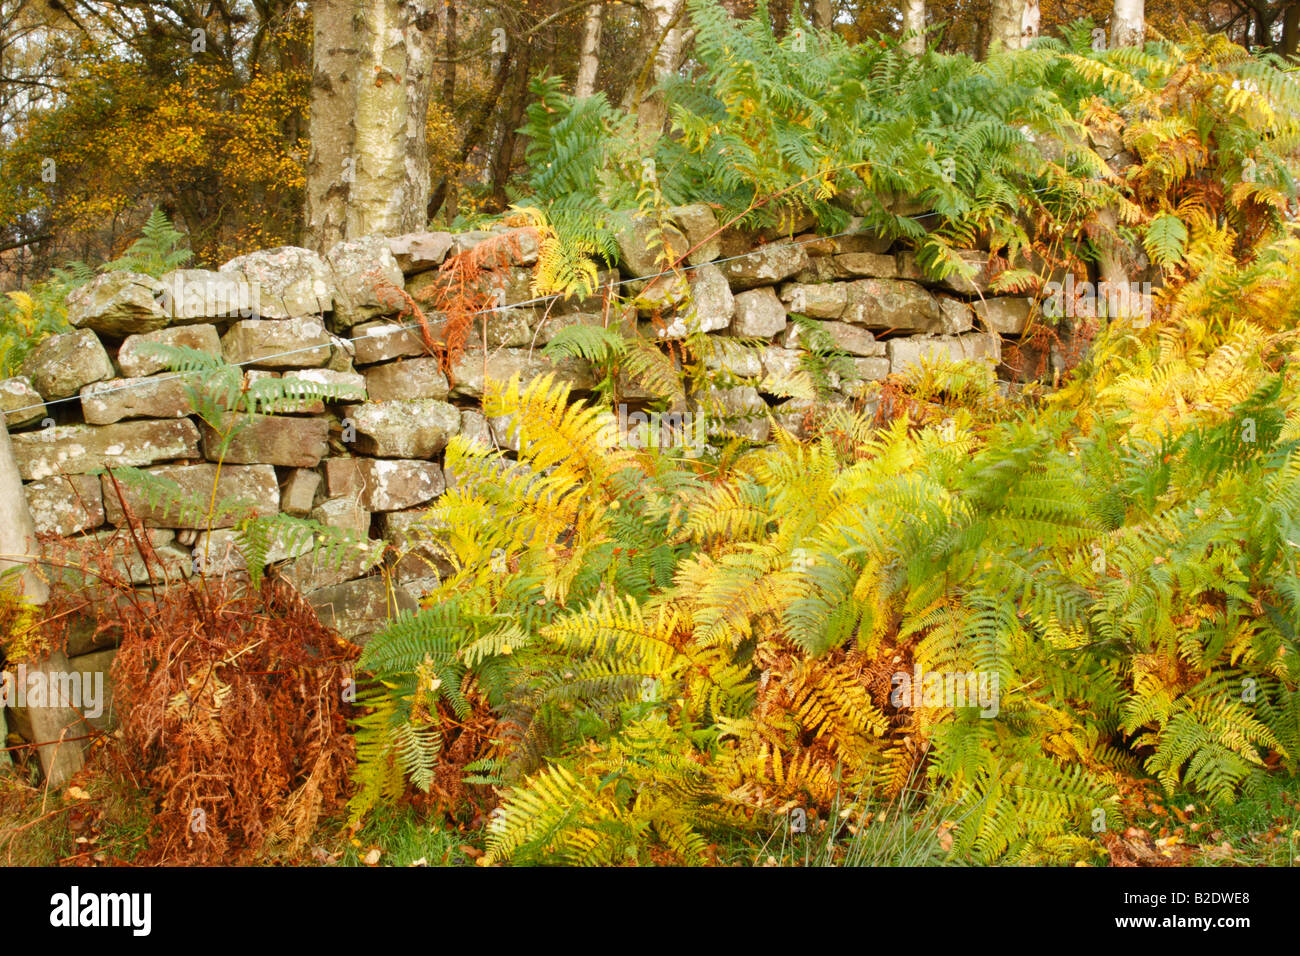 green and yellow bracken Pteridium aquilinum growing alongside a dry stone wall near to a birch woodland Stock Photo